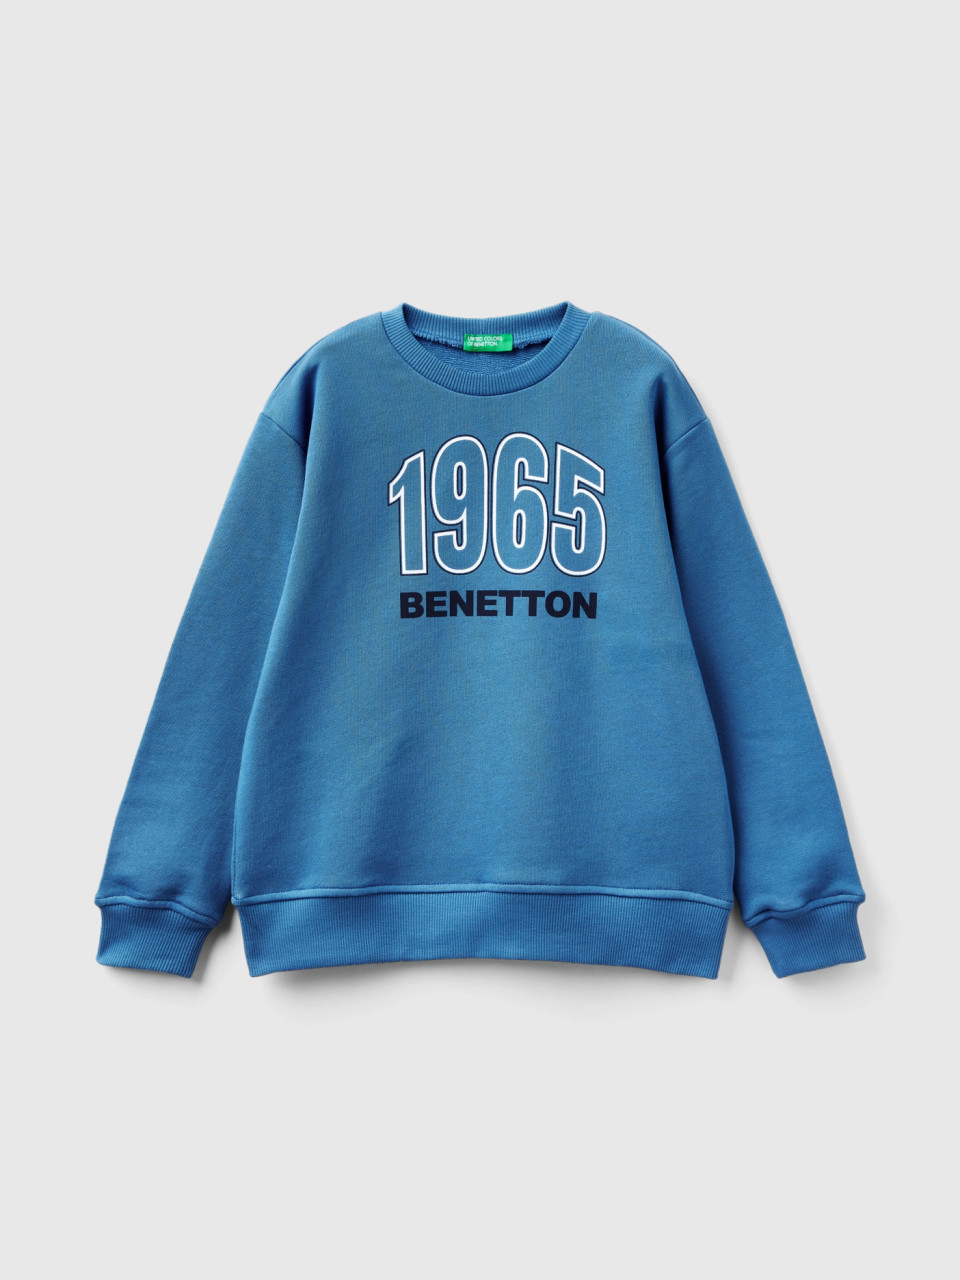 Benetton, Sweatshirt With Logo Print, Blue, Kids